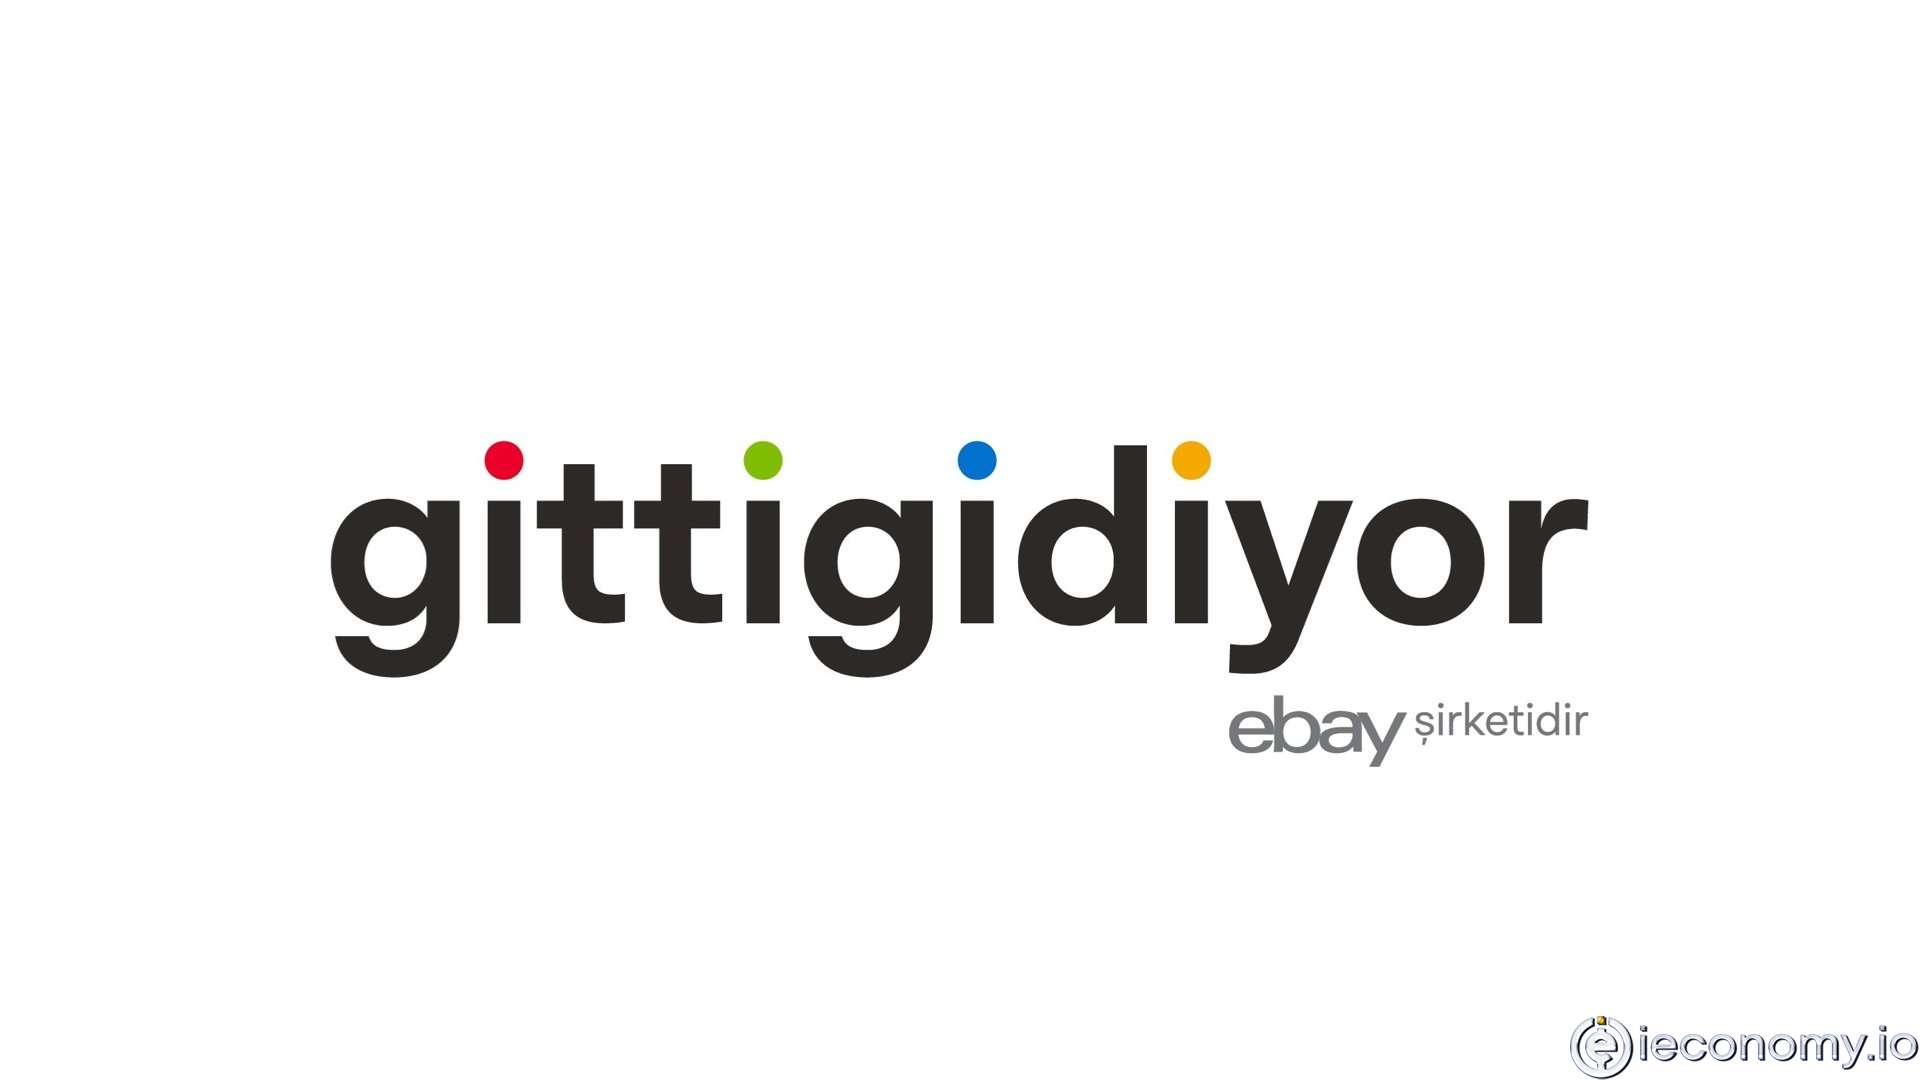 eBay Decides to Withdraw from Turkey